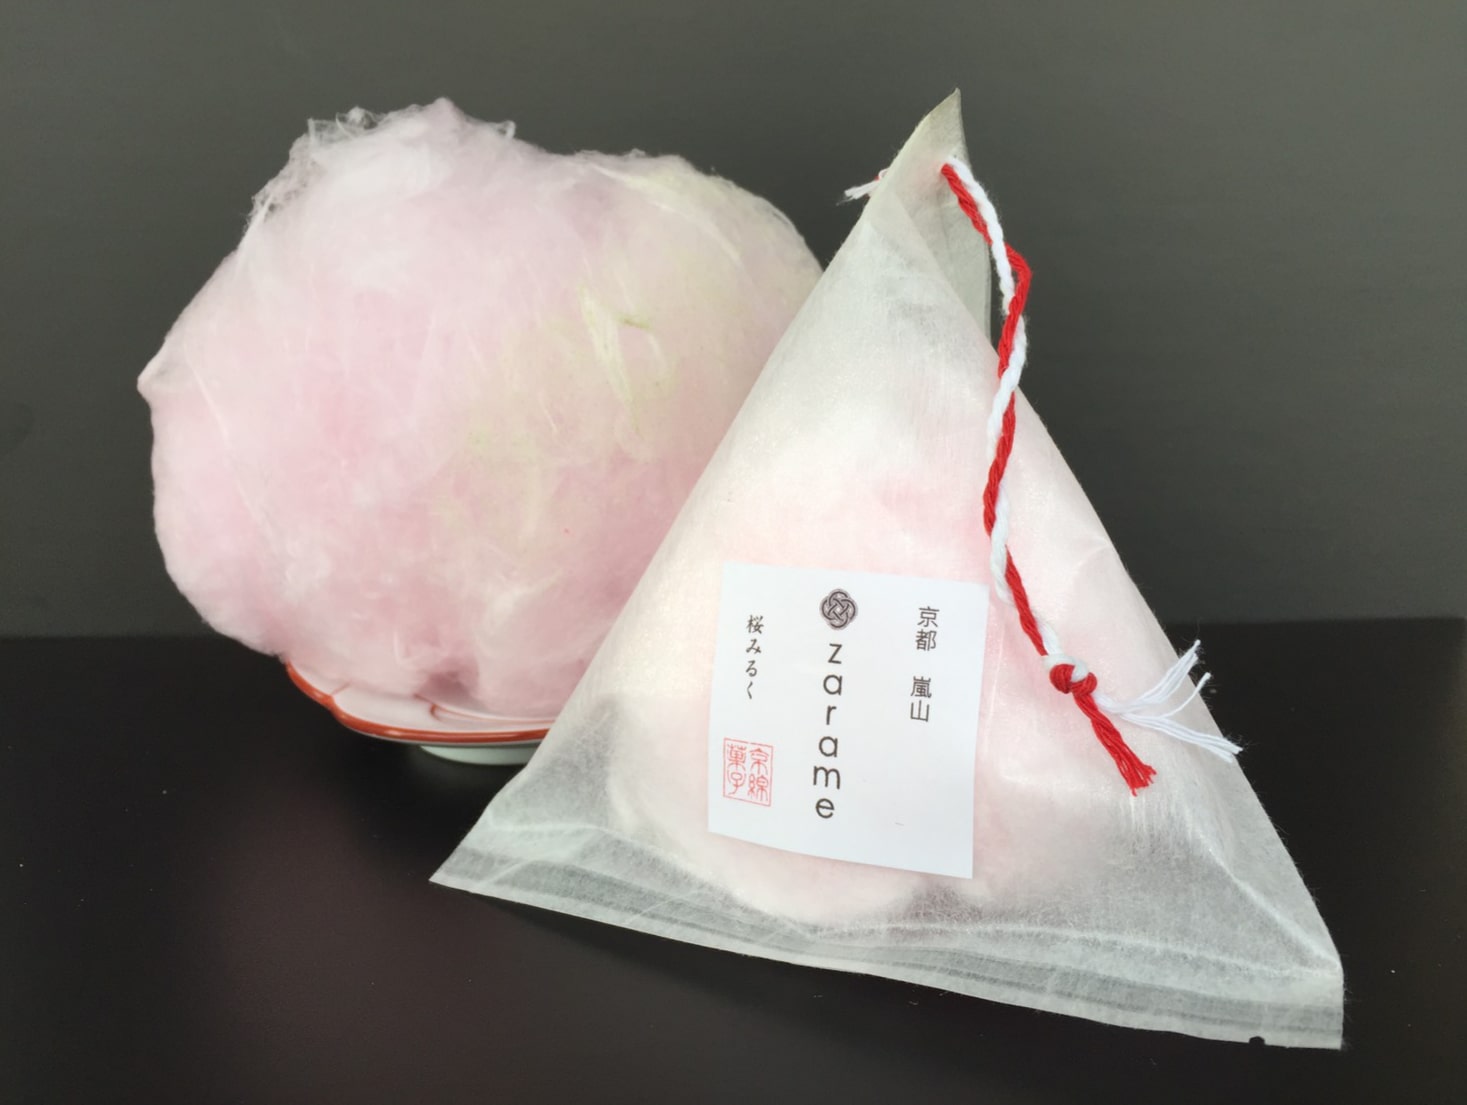 zarame -gourmet cotton candy-